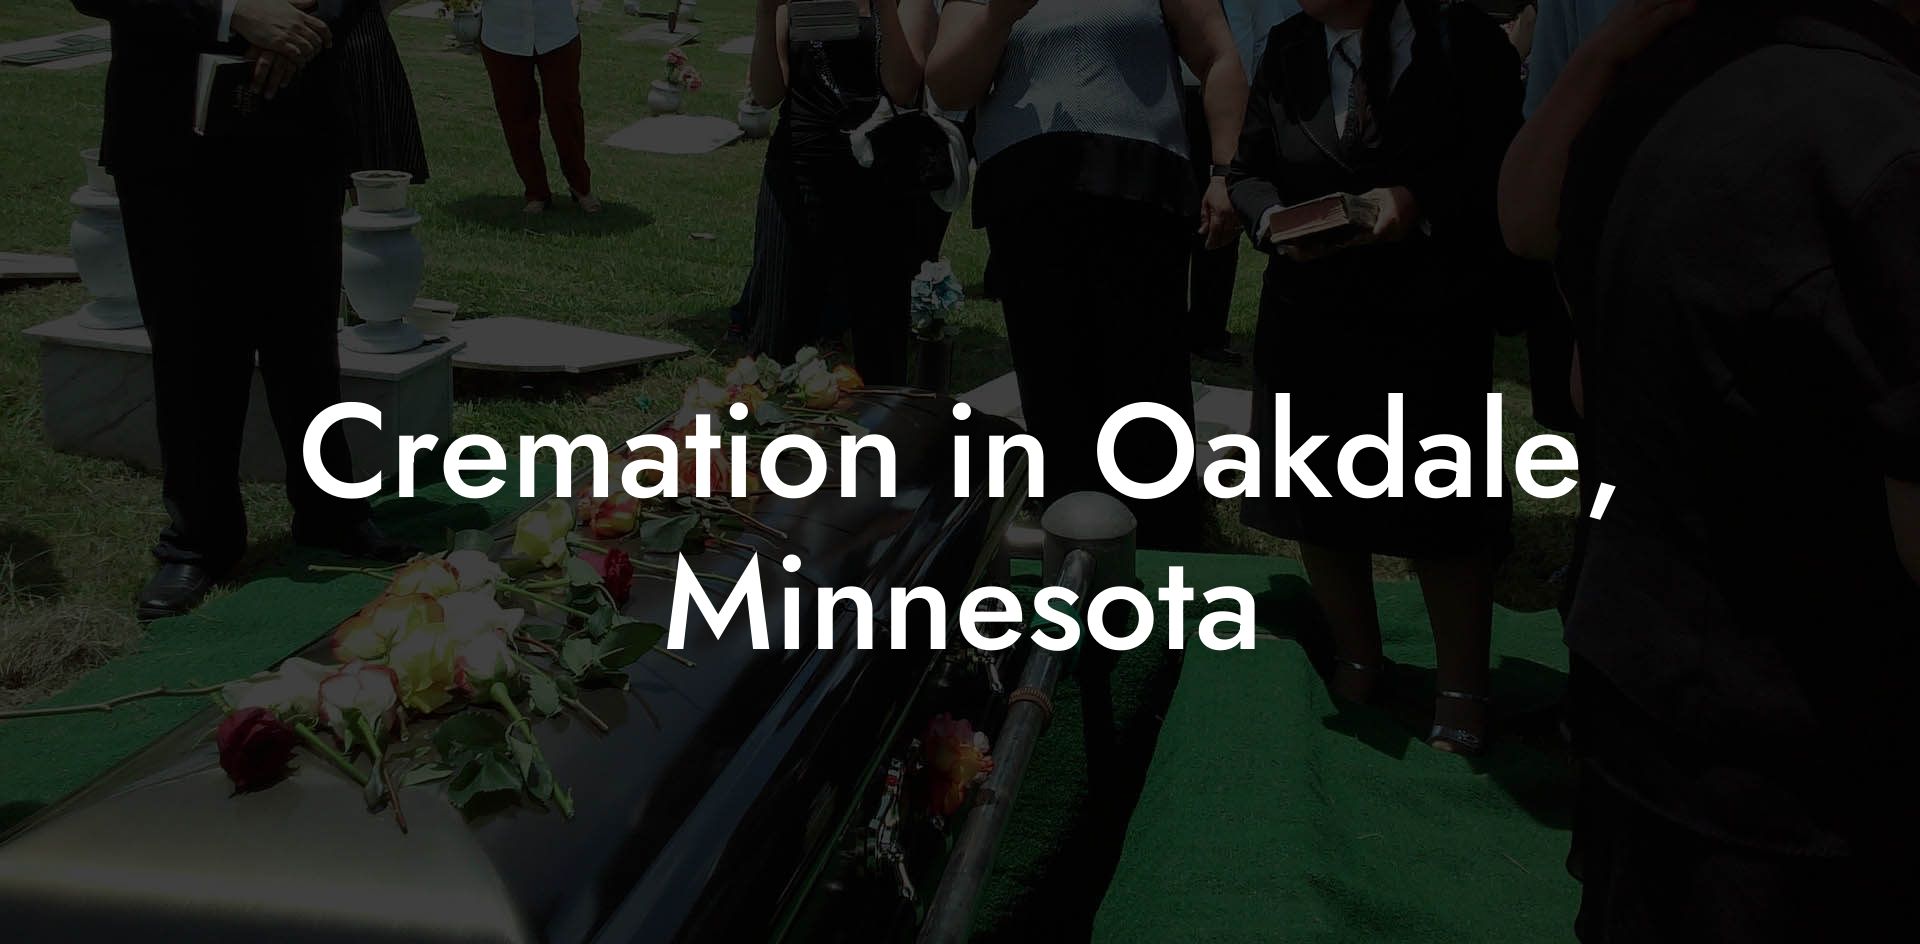 Cremation in Oakdale, Minnesota